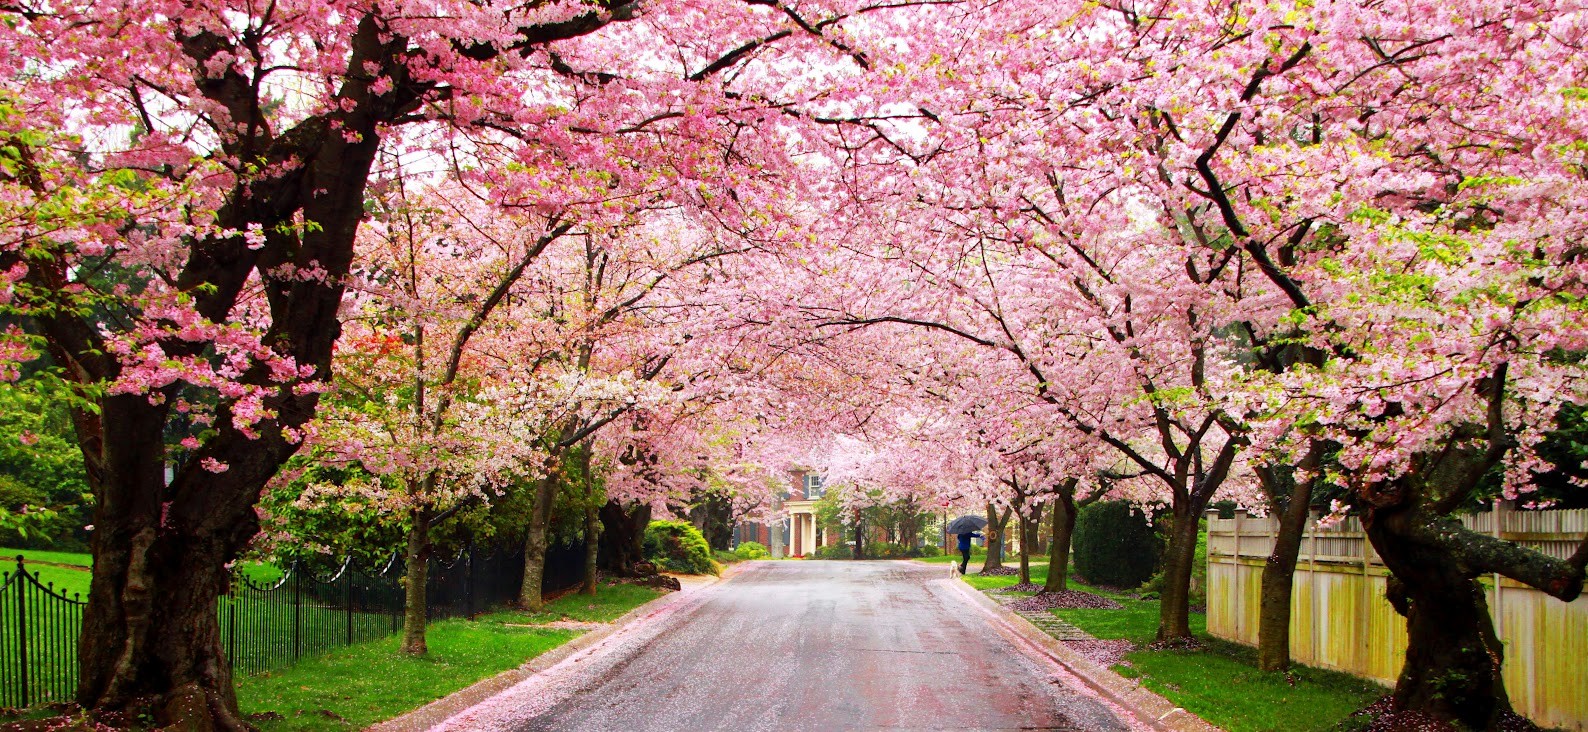 Natural Cherry Blossom - Cherry Blossom Festival Shillong 2016 - HD Wallpaper 